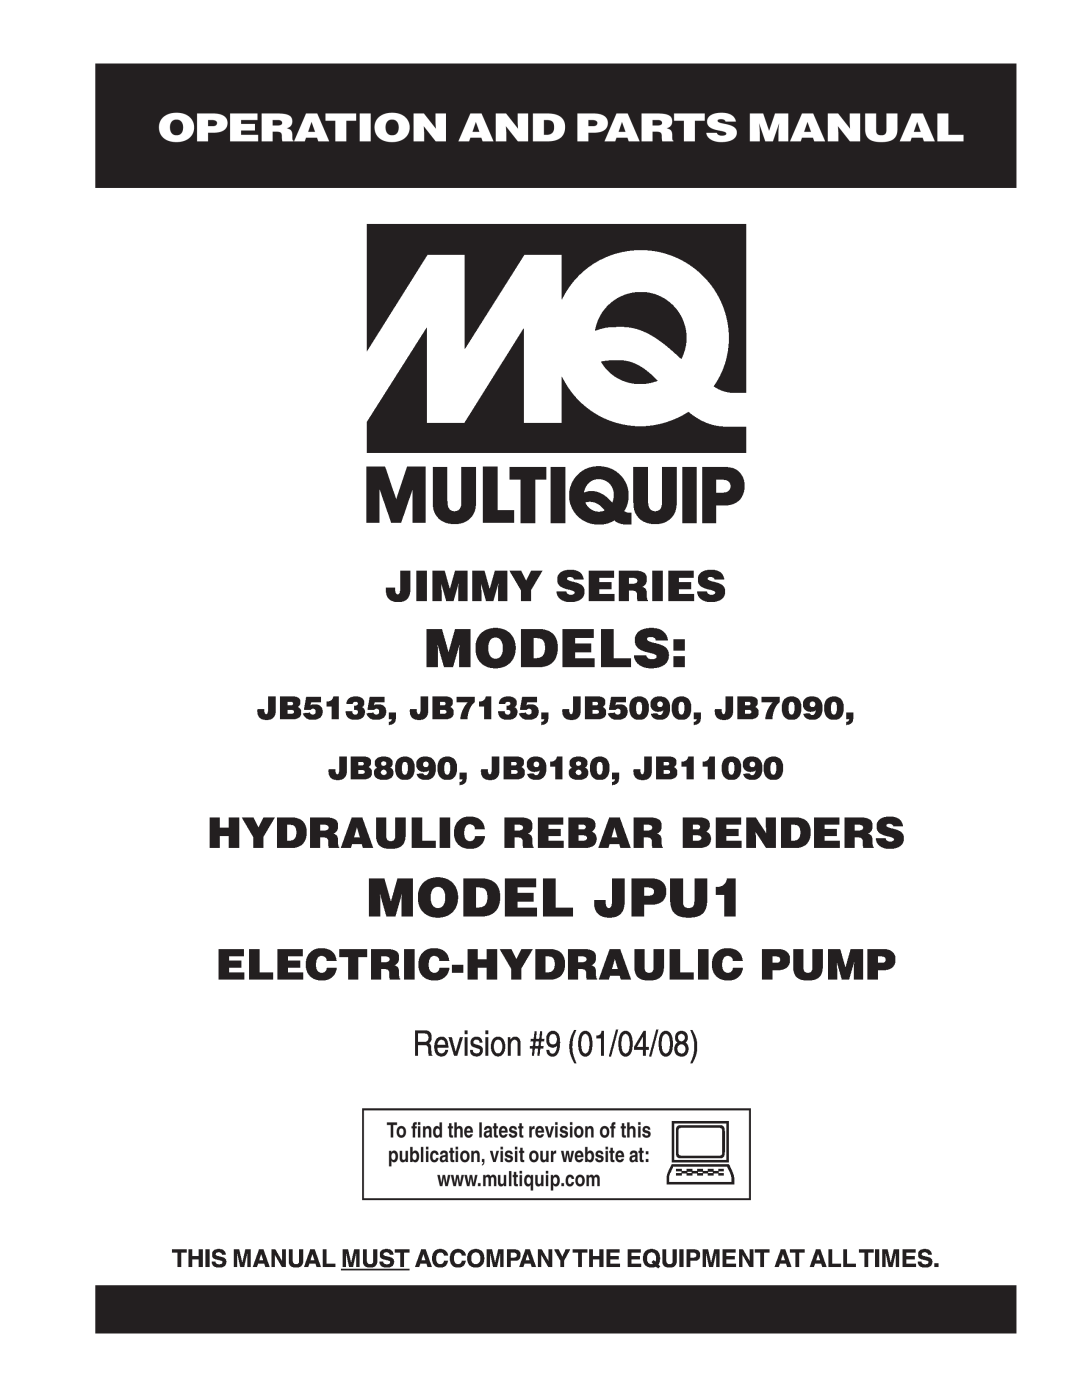 Multiquip JB5090, JB11090 manual Operation And Parts Manual, Models, MODEL JPU1, Jimmy Series, Hydraulic Rebar Benders 